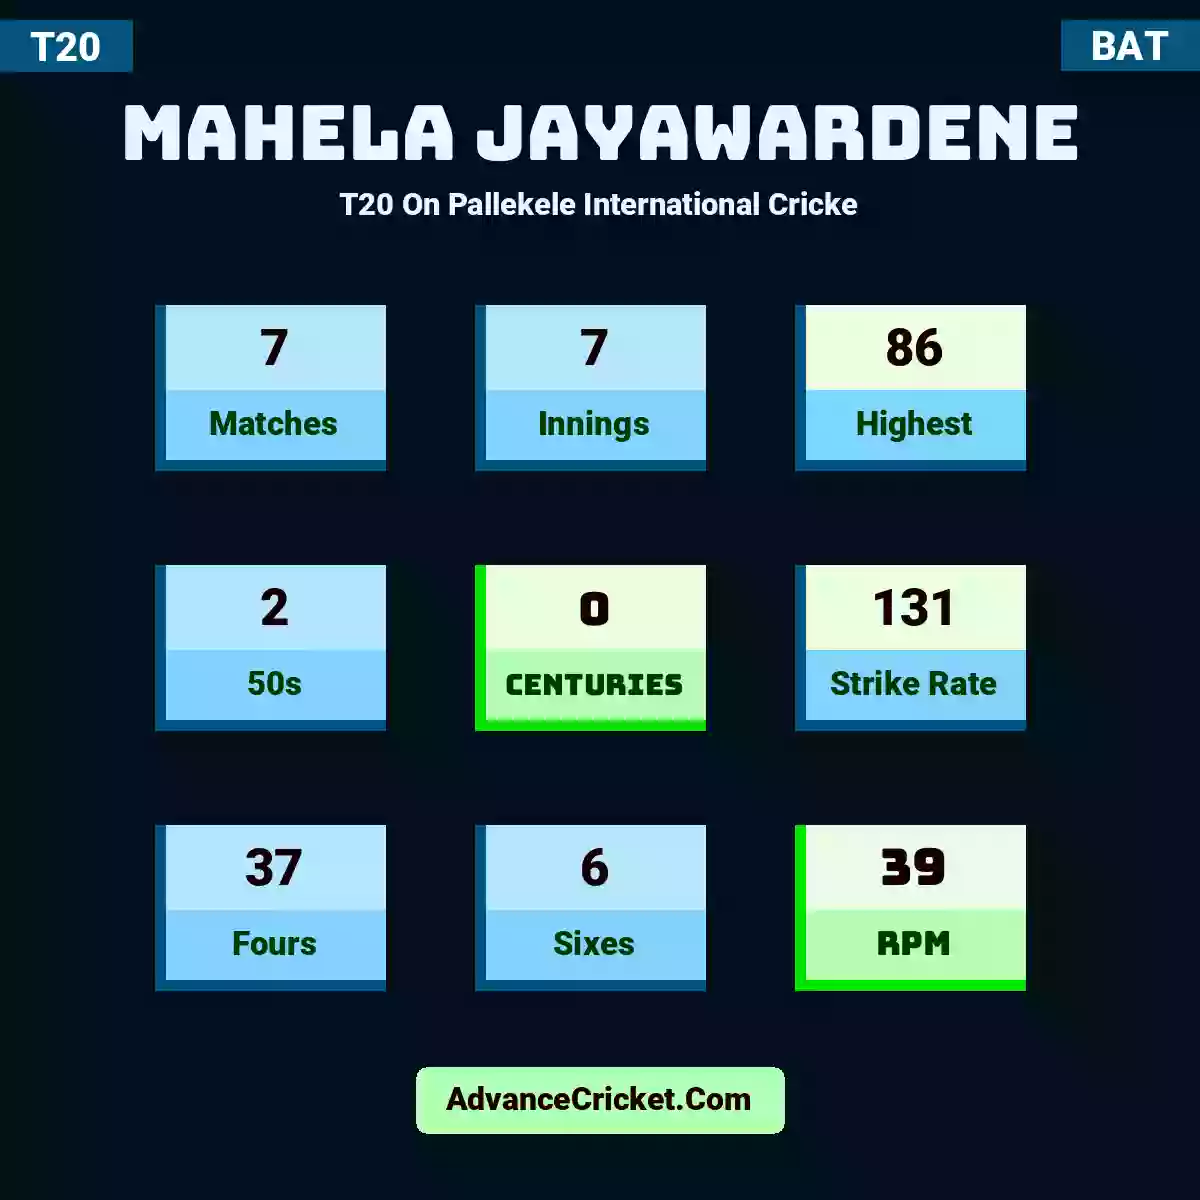 Mahela Jayawardene T20  On Pallekele International Cricke, Mahela Jayawardene played 7 matches, scored 86 runs as highest, 2 half-centuries, and 0 centuries, with a strike rate of 131. M.Jayawardene hit 37 fours and 6 sixes, with an RPM of 39.